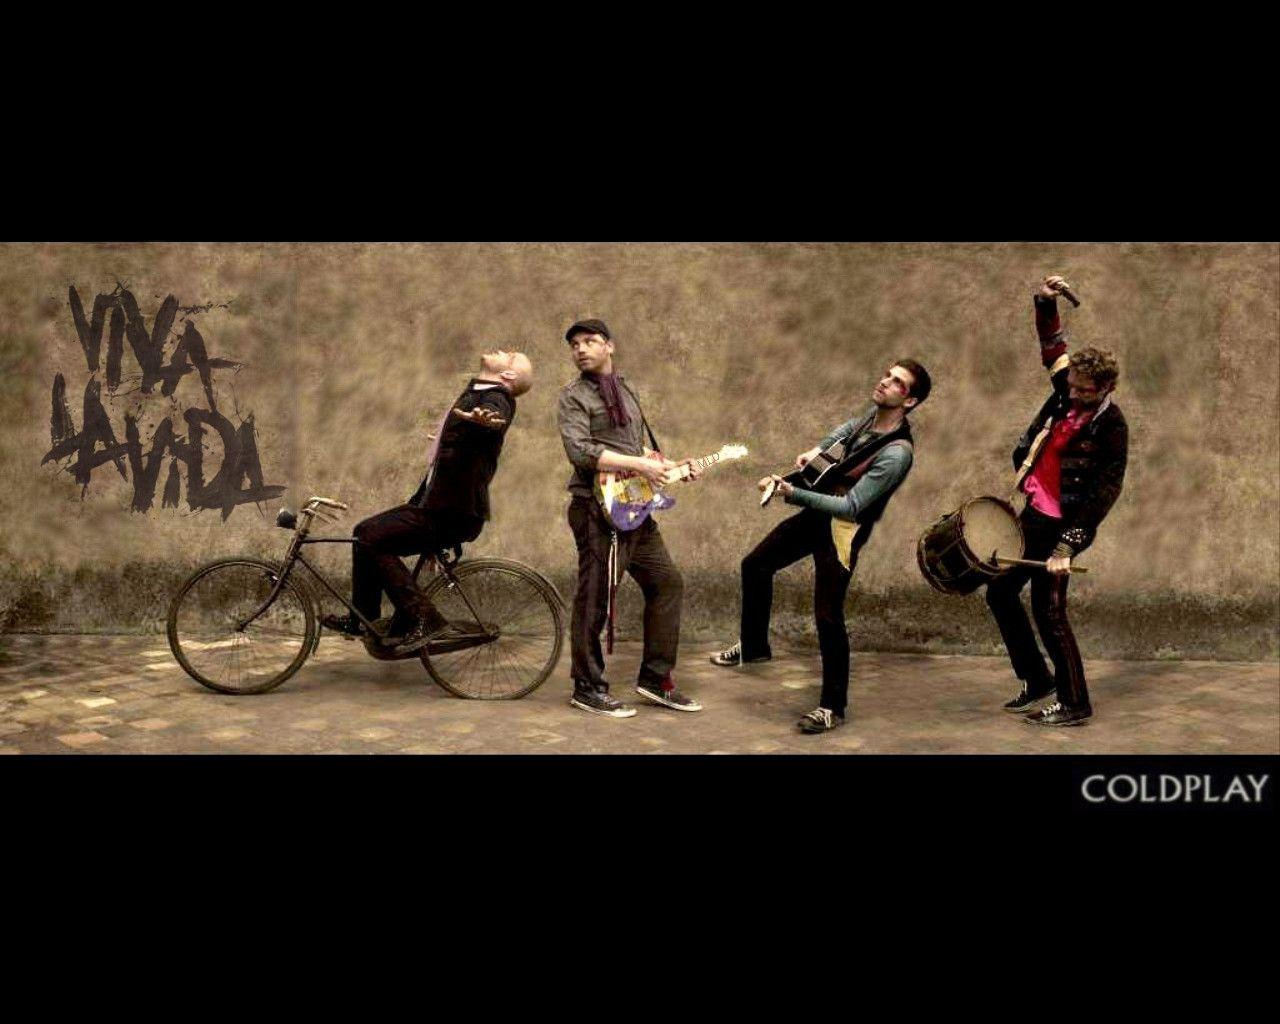 QQ Wallpaper: Coldplay Band Posters, Wallpaper and Image